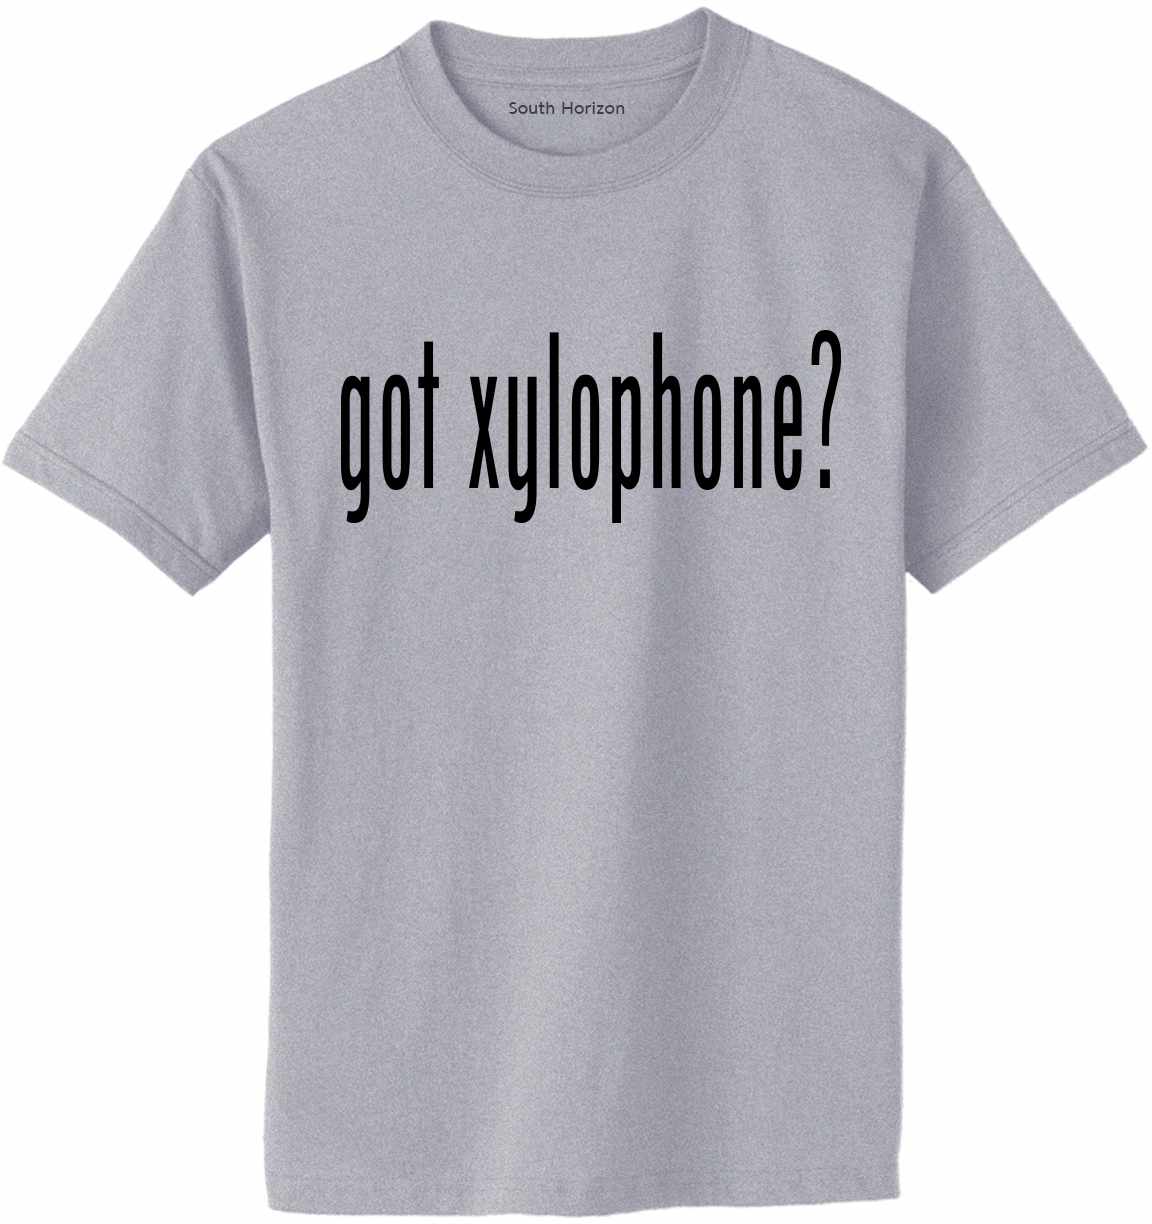 Got Xylophone? Adult T-Shirt (#899-1)